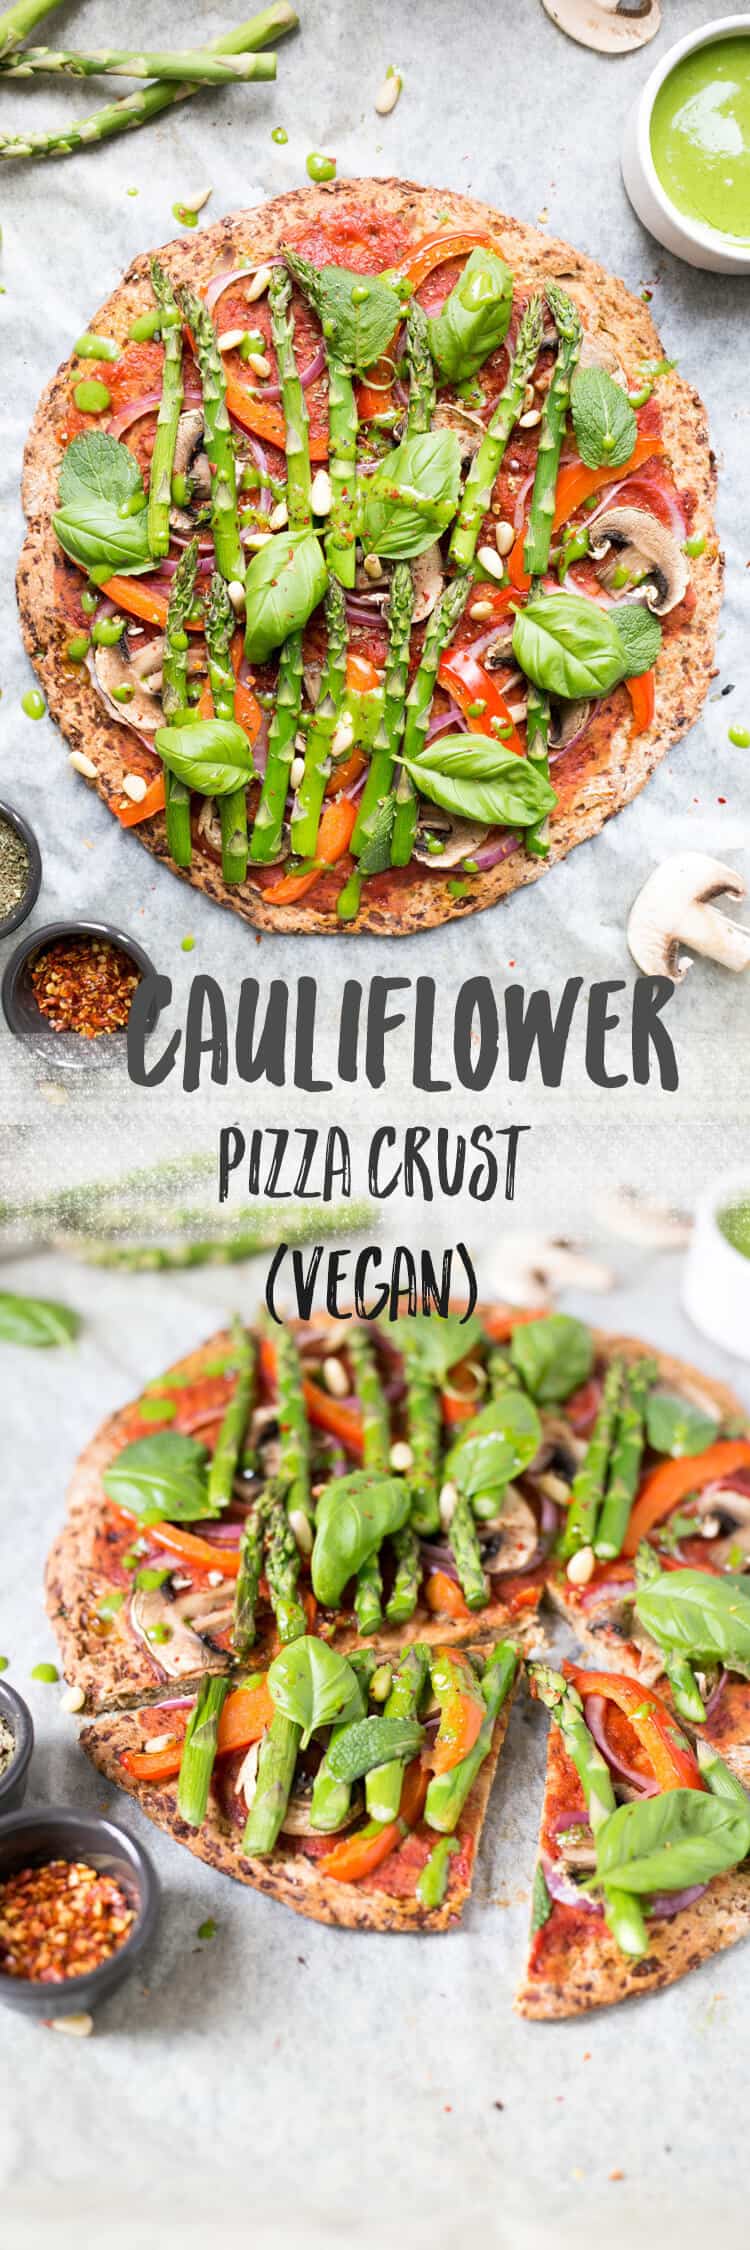 Easy cauliflower pizza crust with spinach dressing | via @annabanana.co